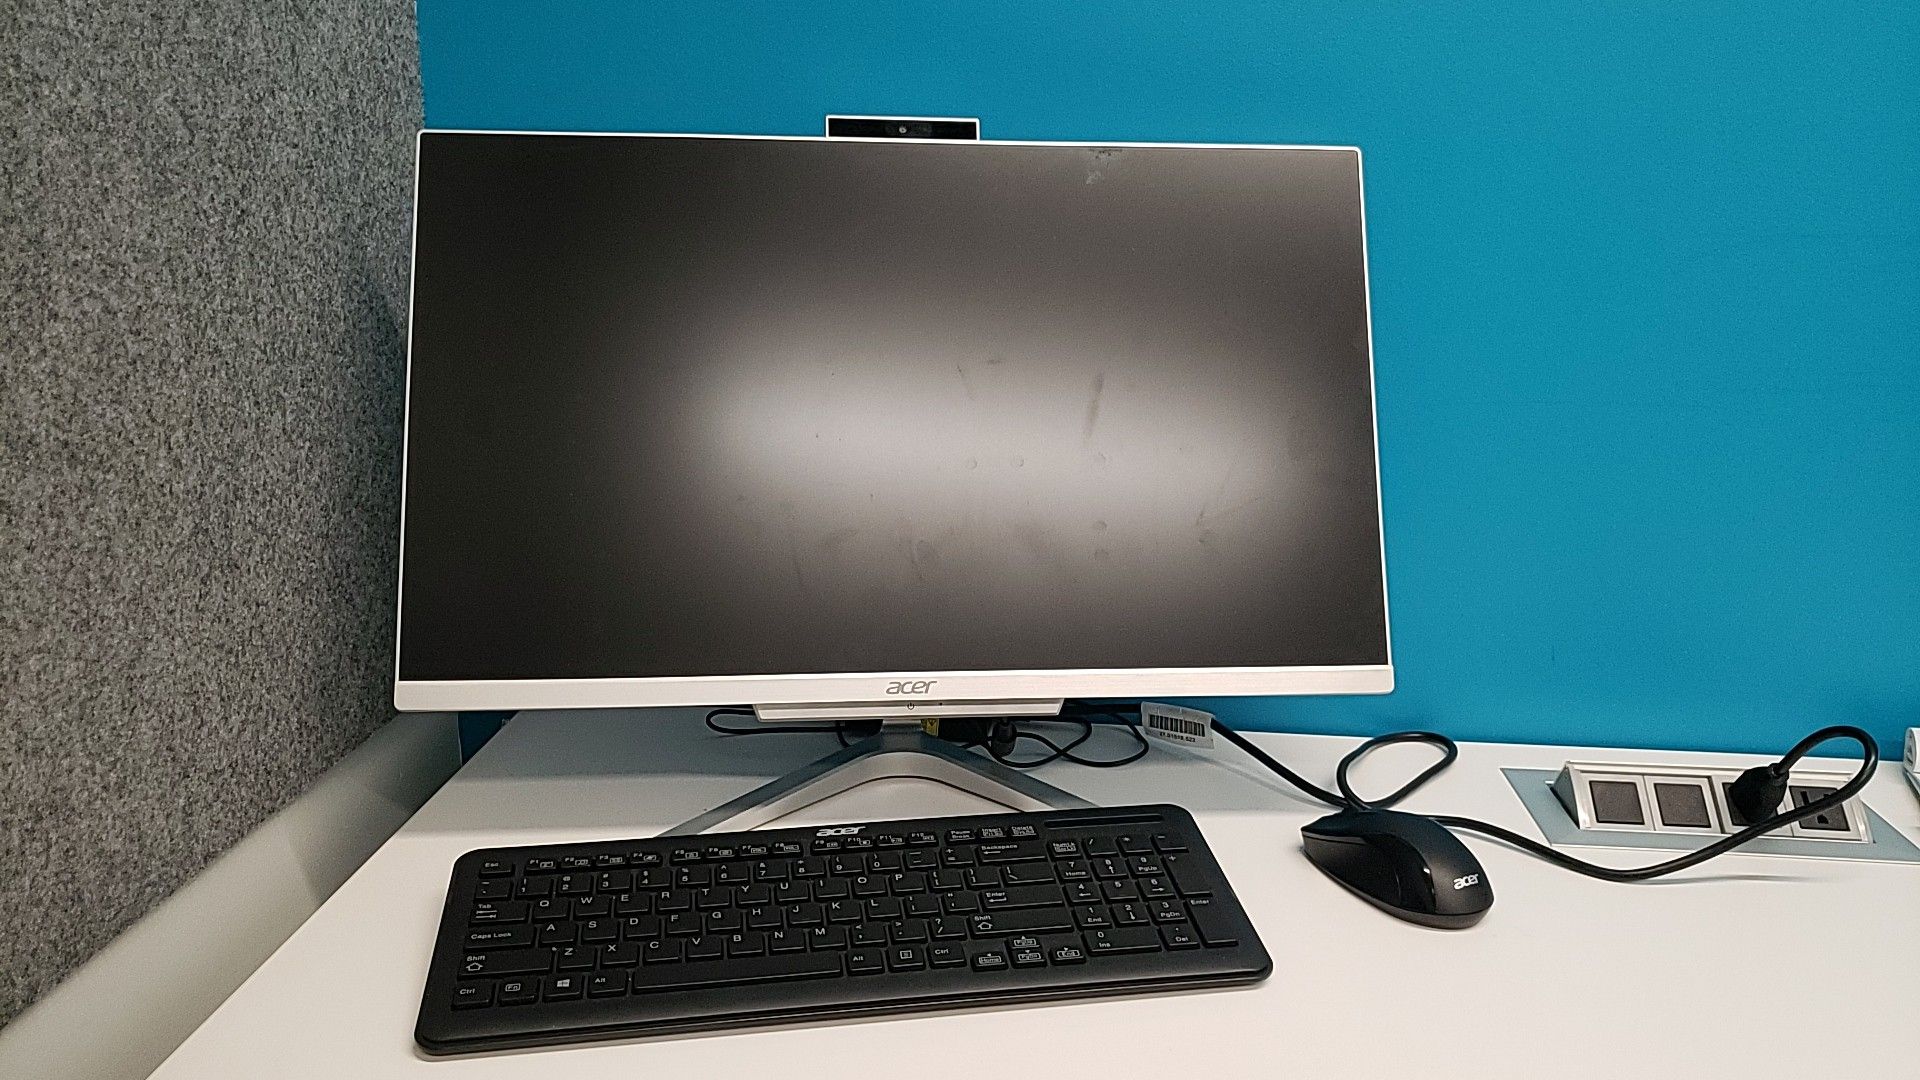 Acer all in one desktop computer